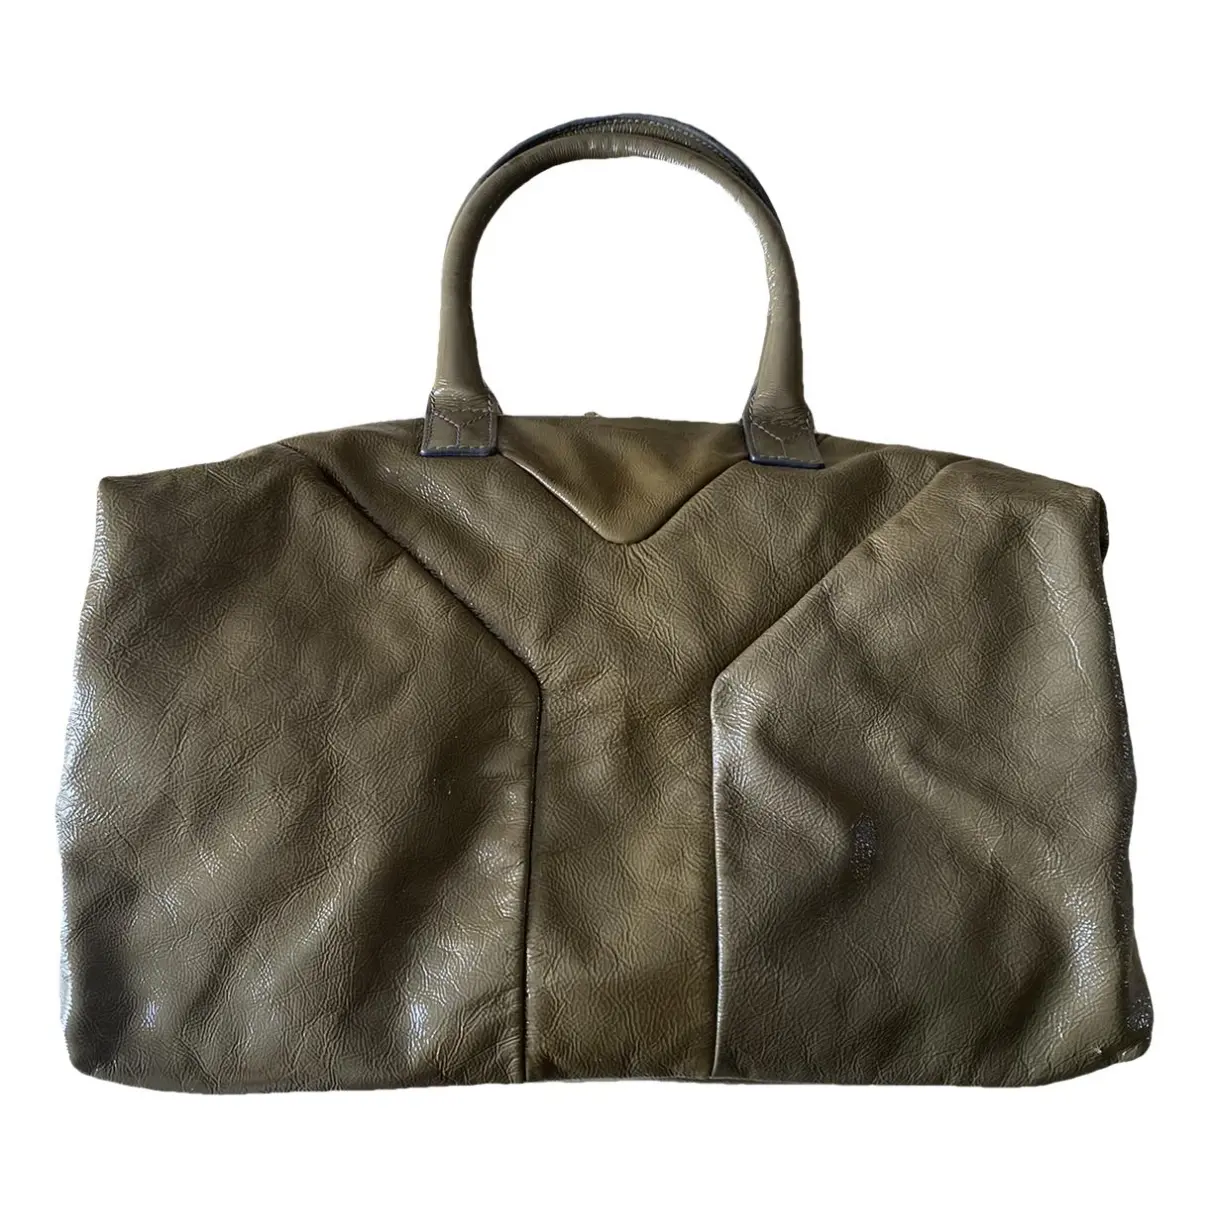 Easy patent leather handbag